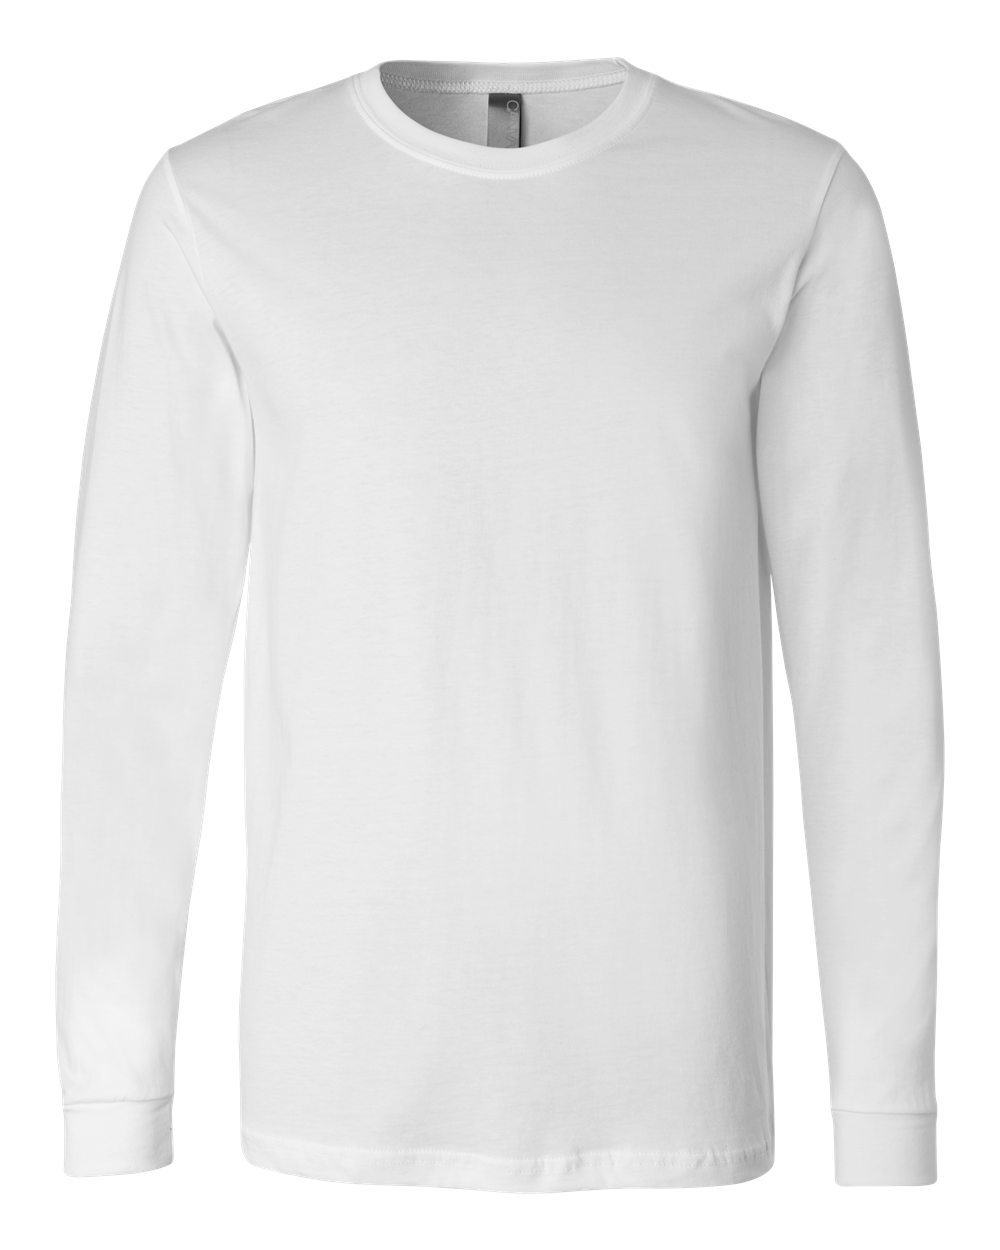 Blank Bella Canvas 3501 Unisex Long Sleeve Shirt